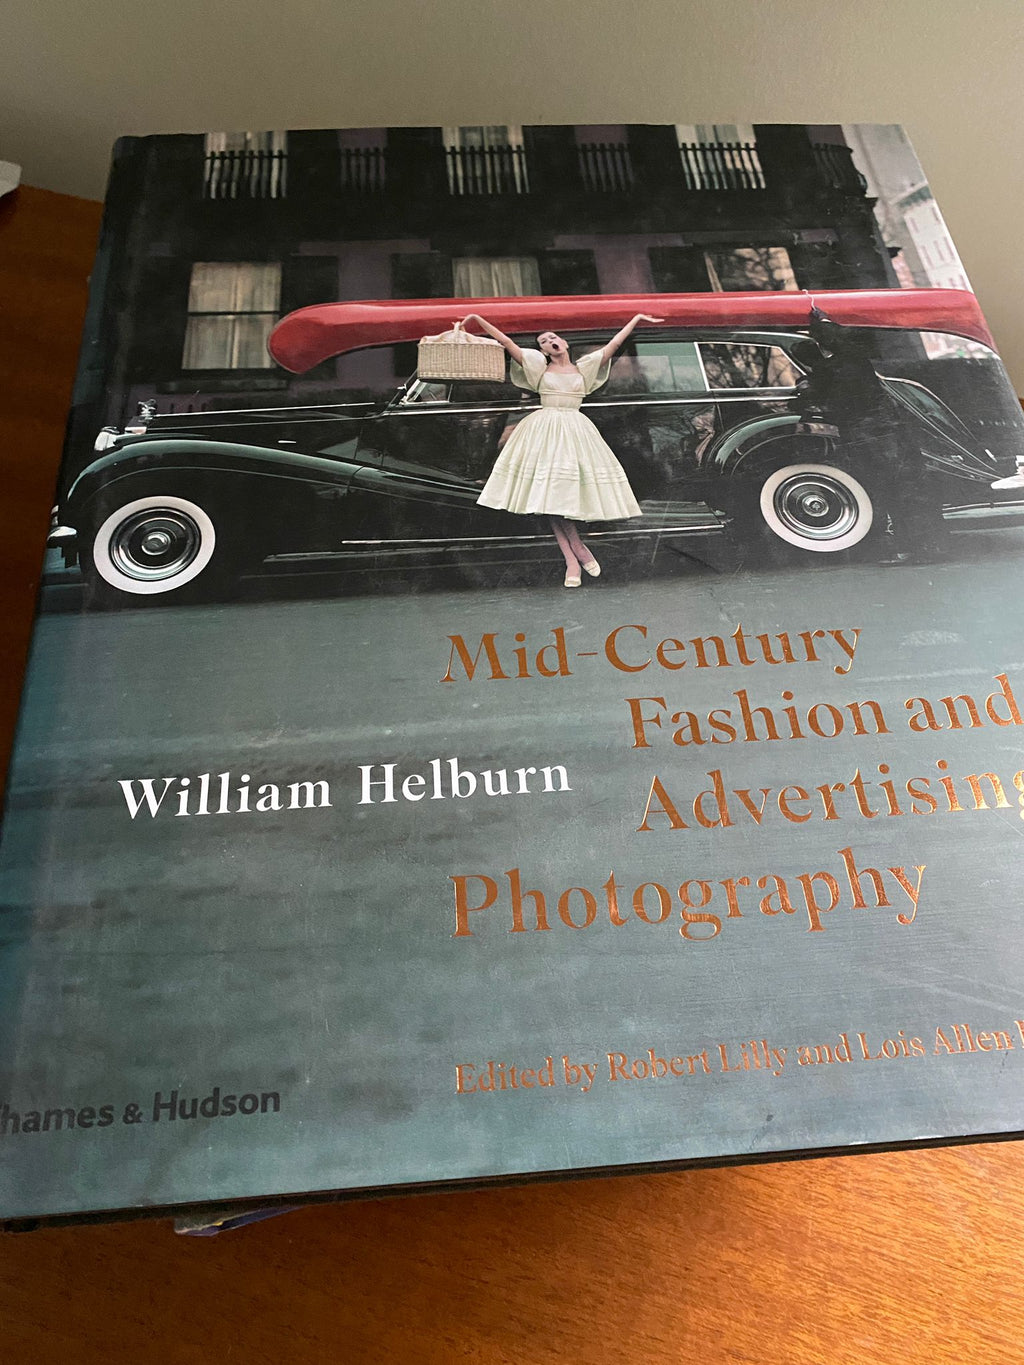 William Helburn, Mid-Century Fashion & Advertising Photography